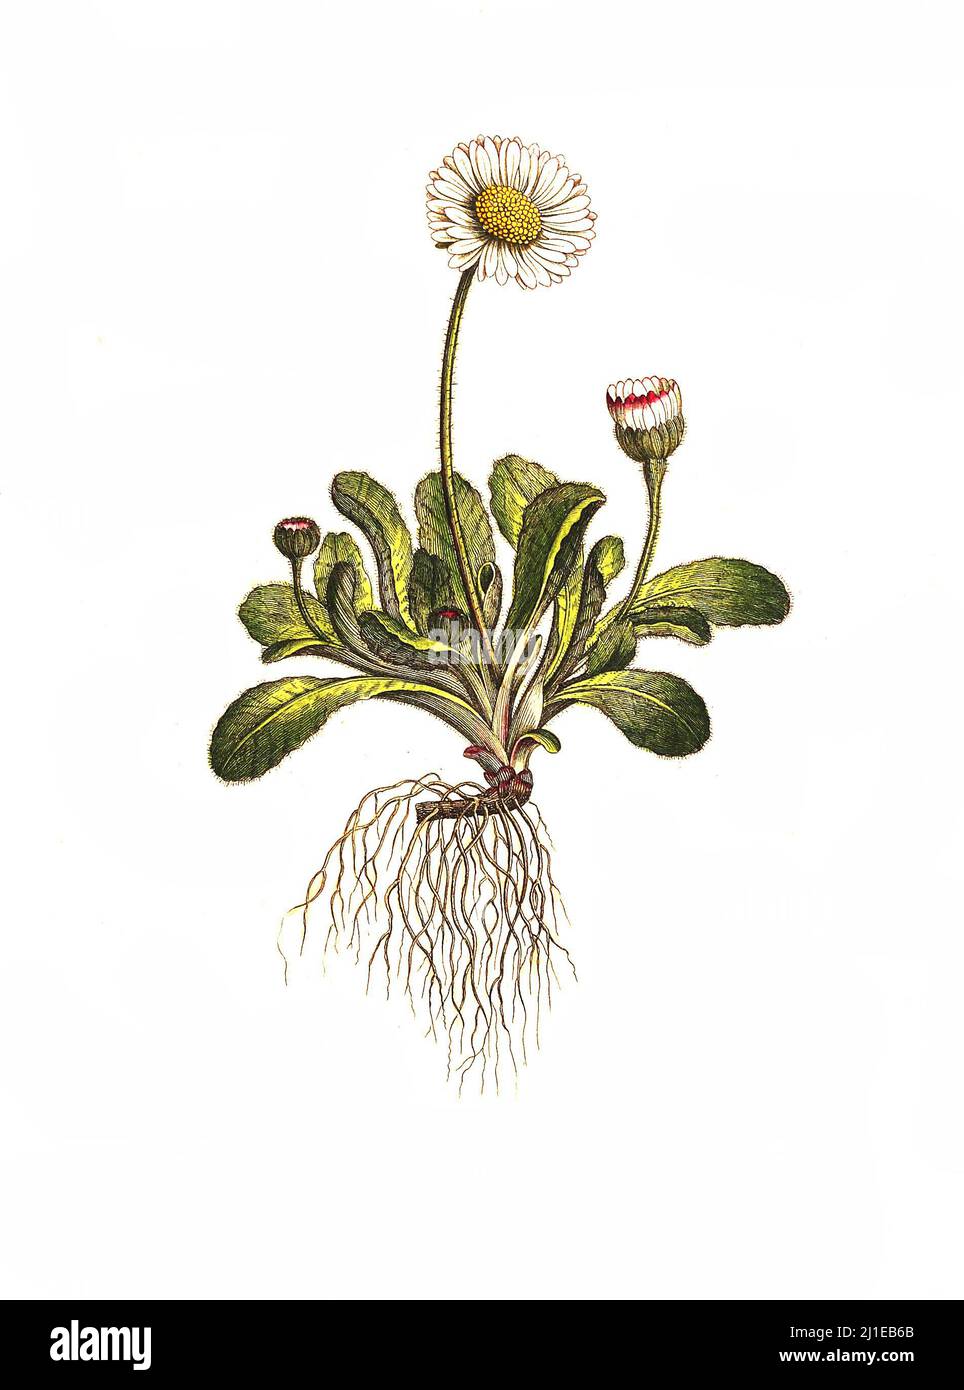 Das Gänseblümchen, Bellis perennis, auch Ausdauerndes Gänseblümchen, Mehrjähriges Gänseblümchen, Maßliebchen, Tausendschön, Familie der Korbblütler  /  Bellis perennis, the daisy, is a common European species of the family Asteraceae Stock Photo